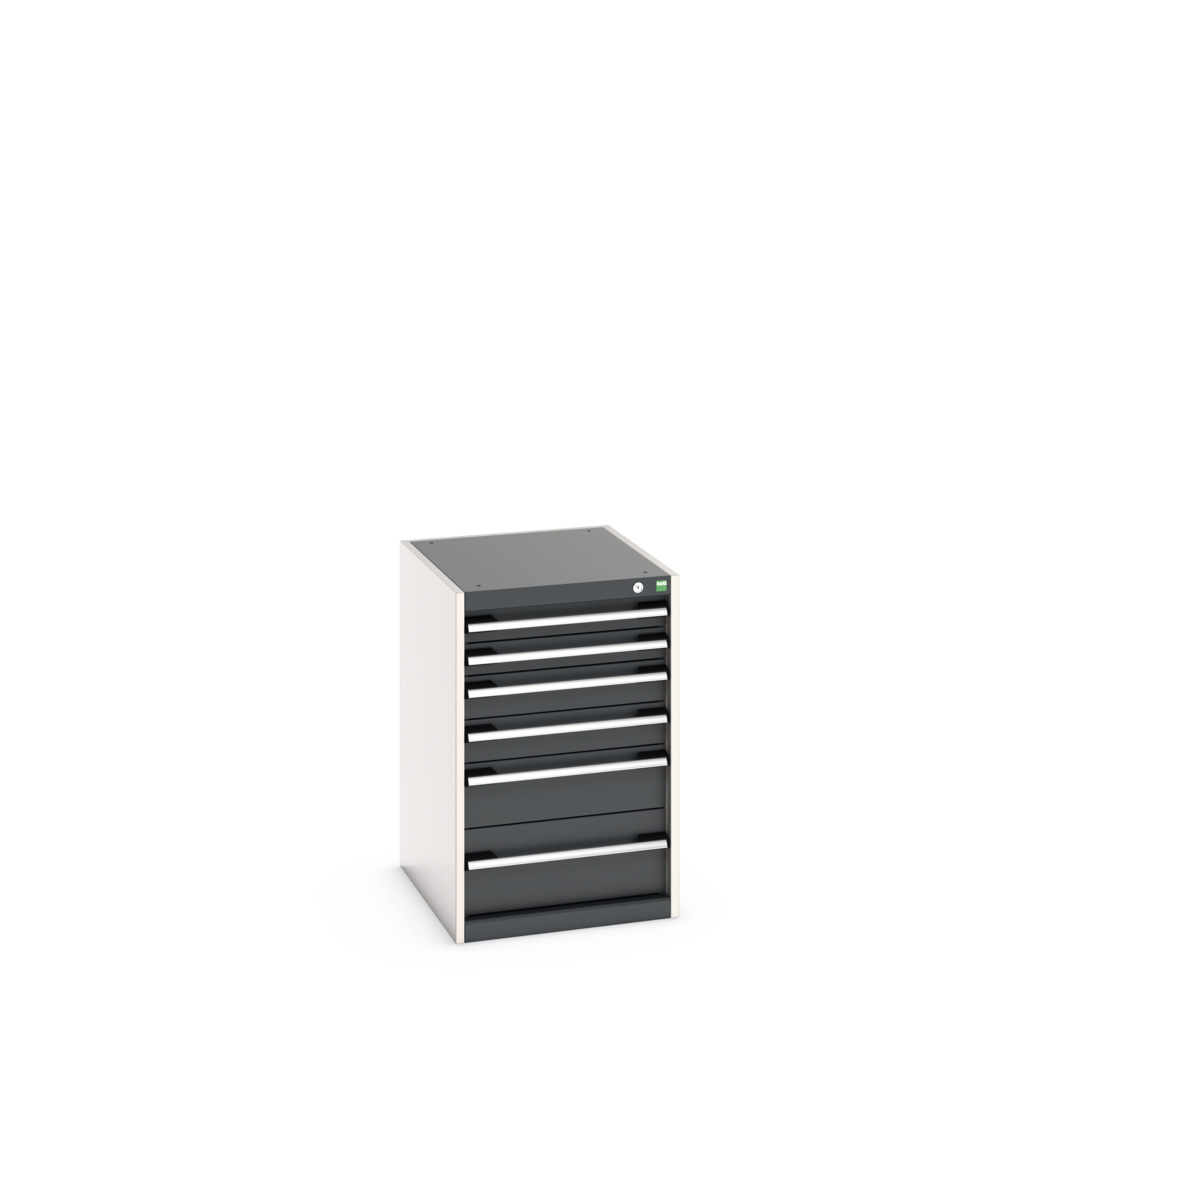 40018039. - cubio drawer cabinet